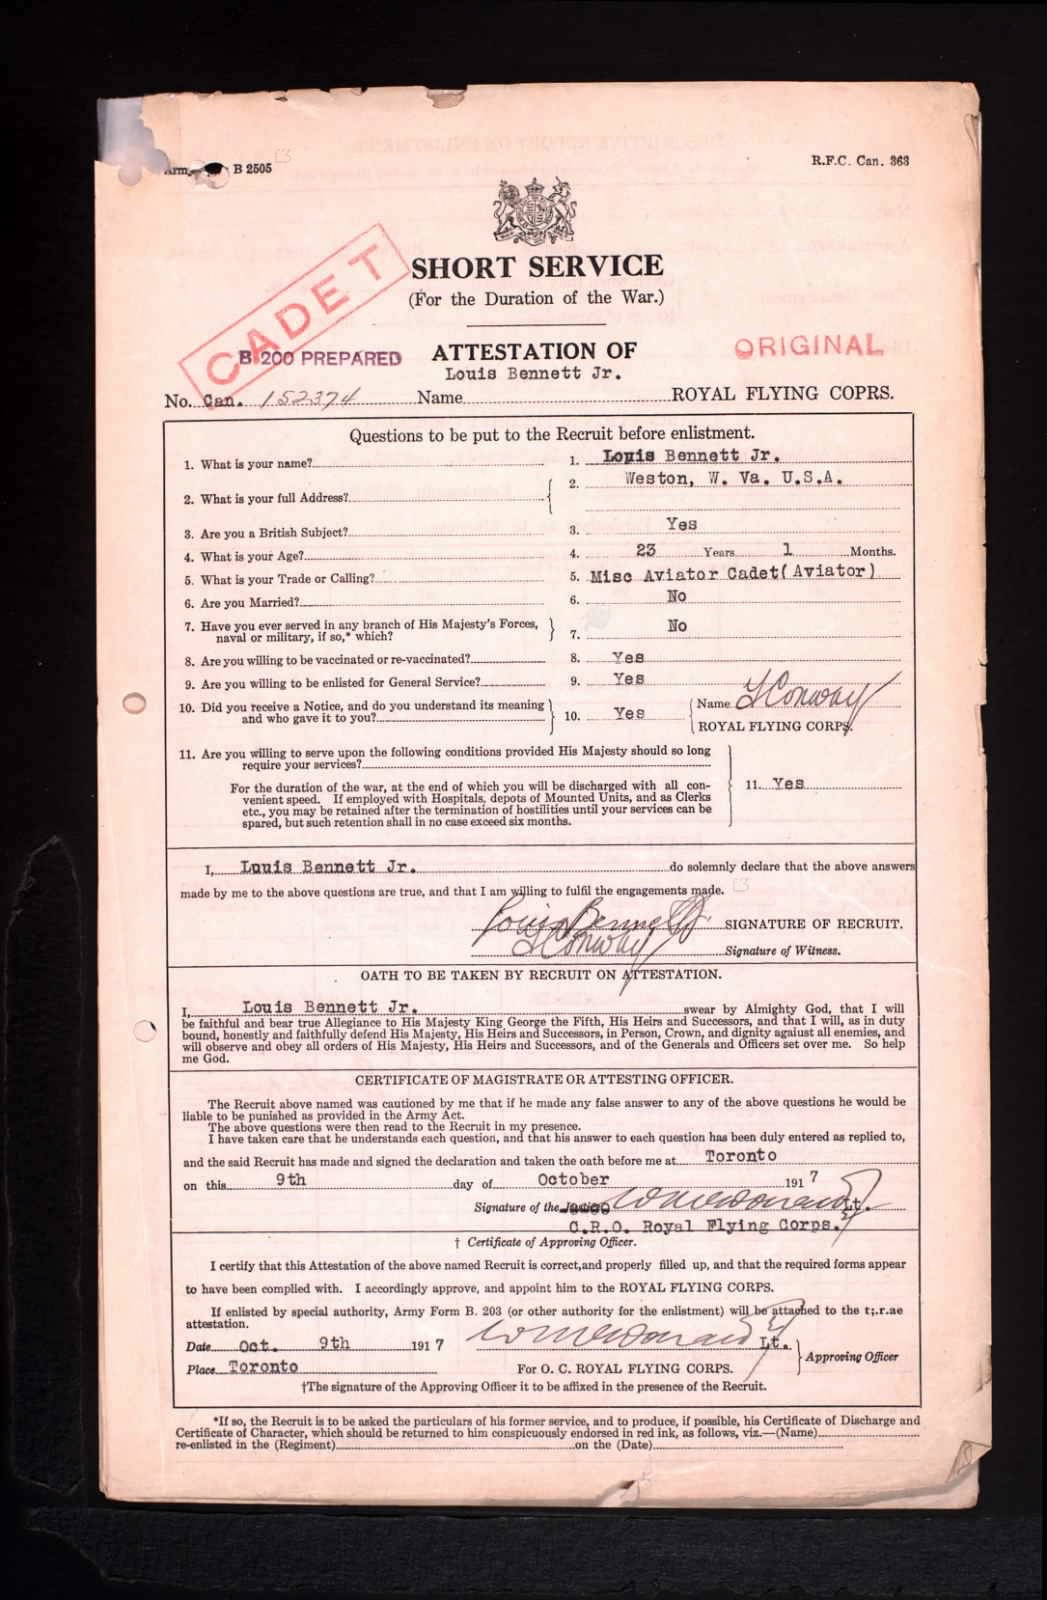 Military forms for Louis Bennett, Jr.